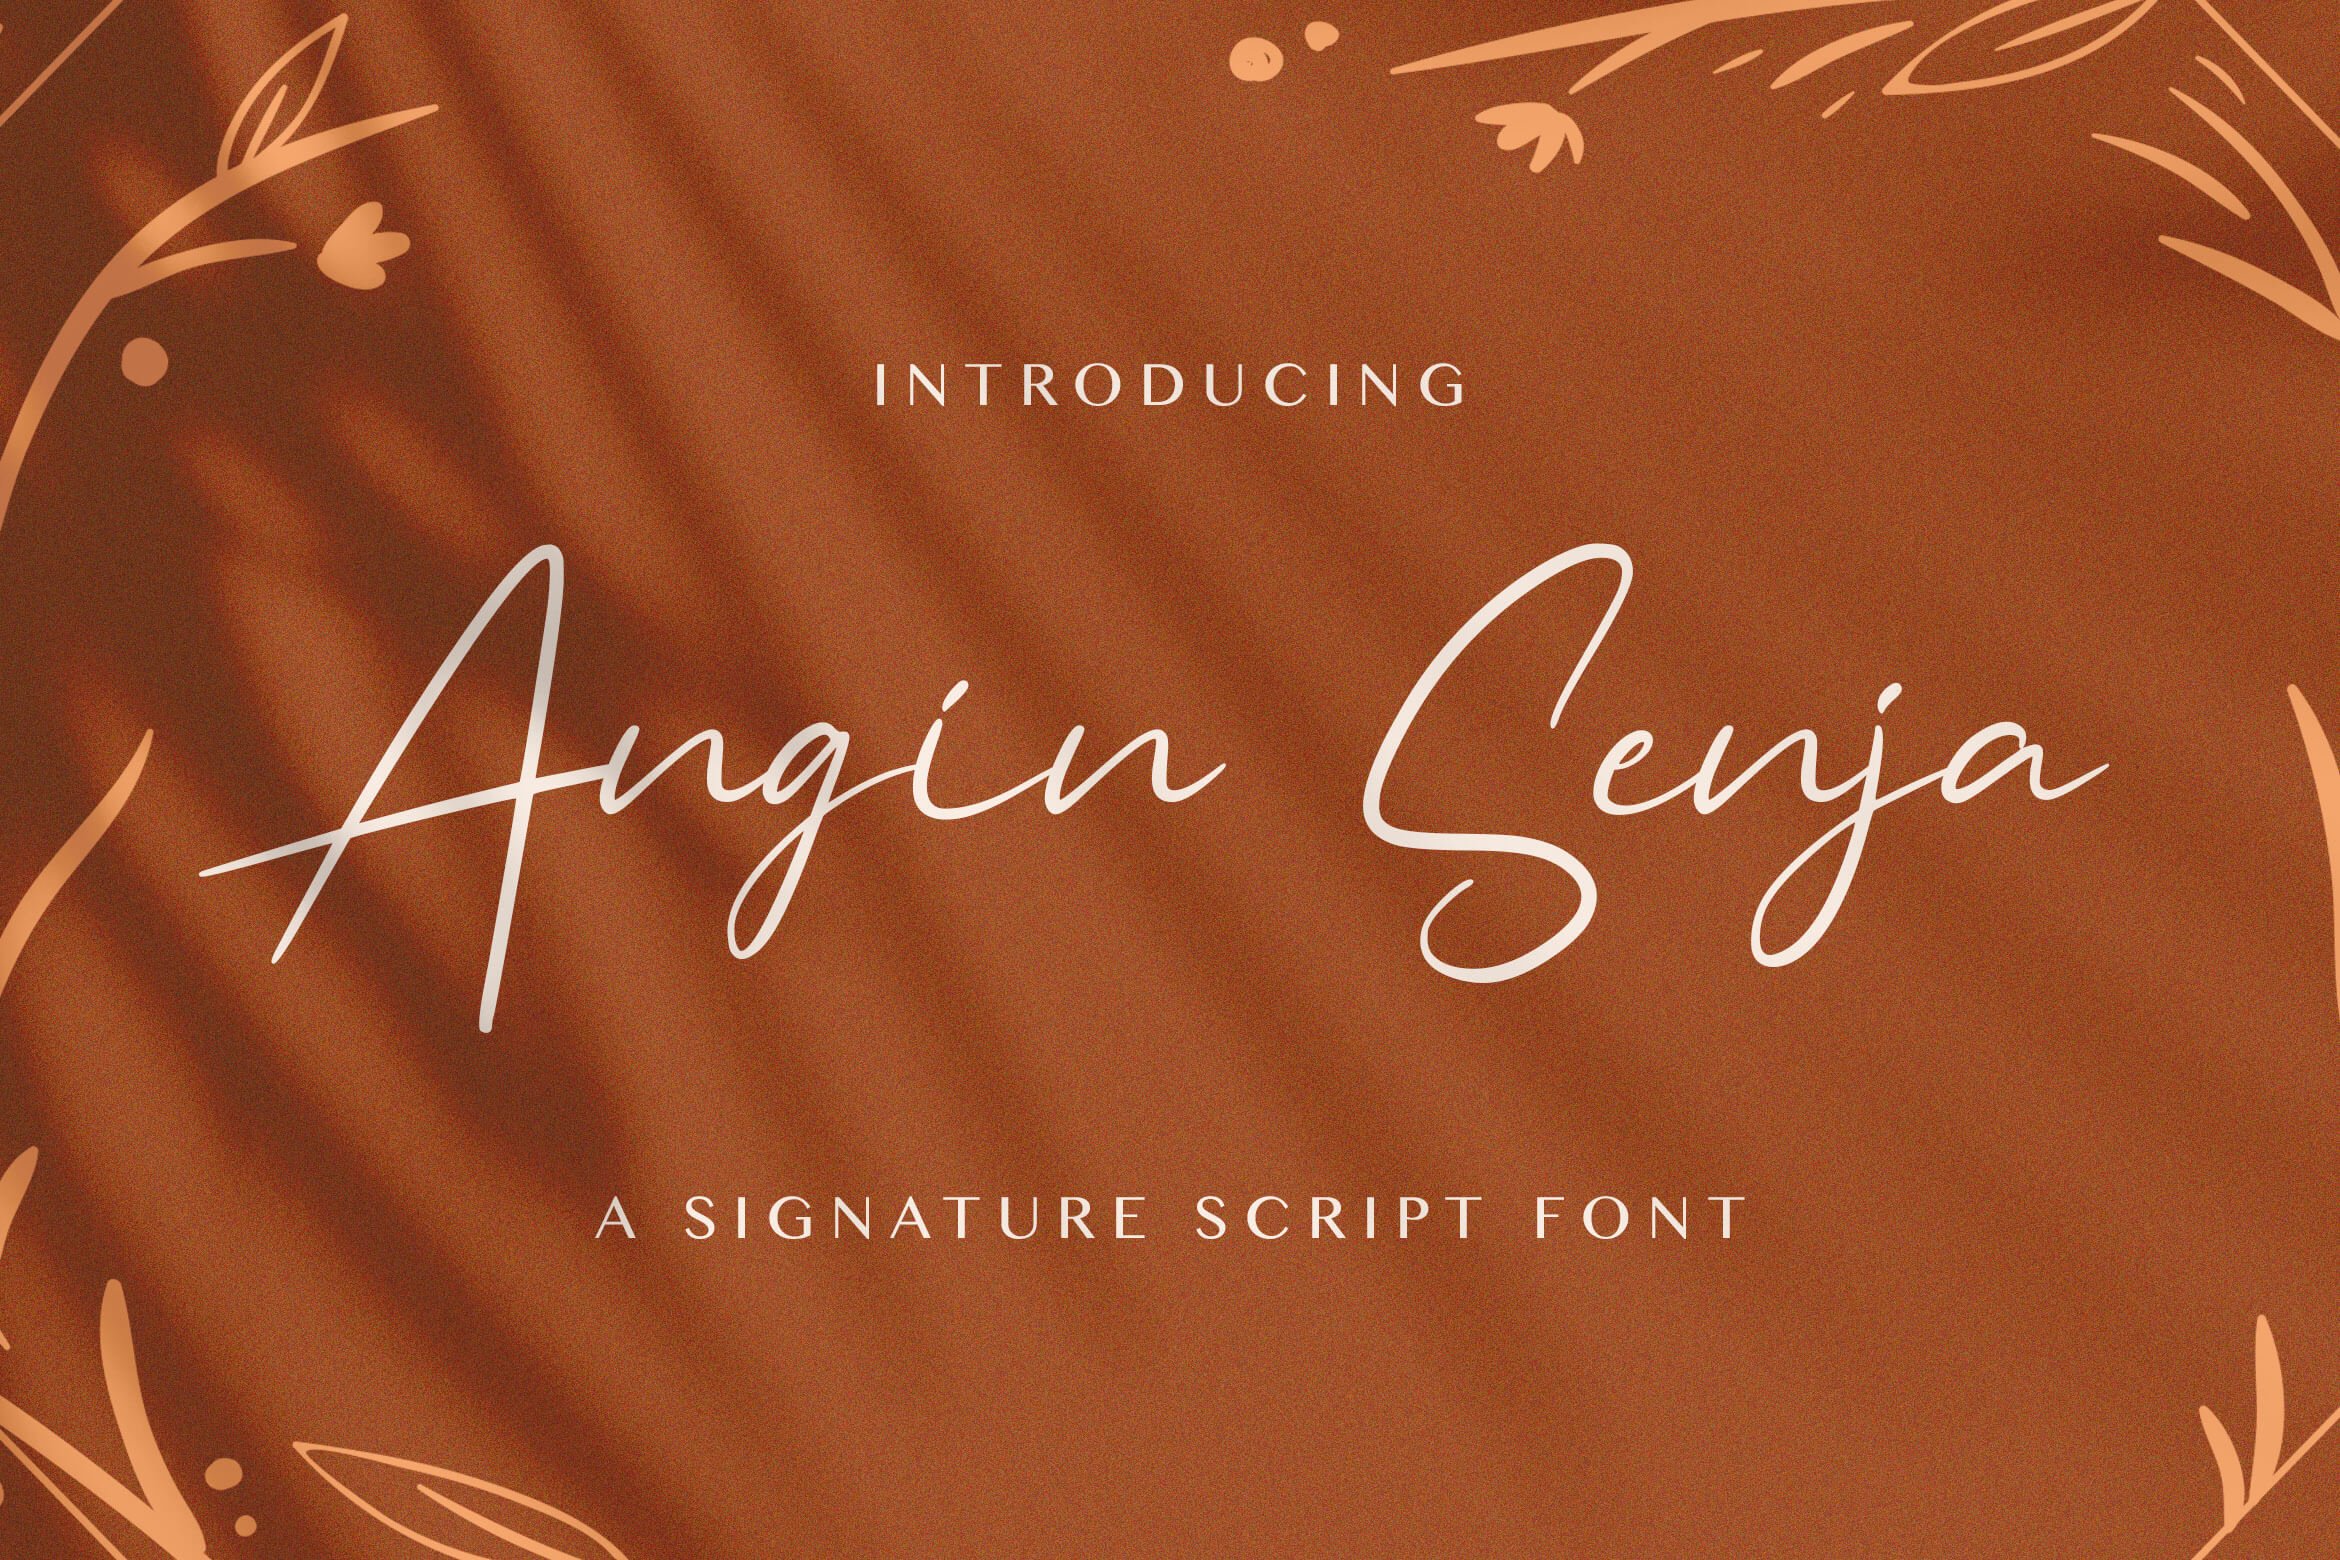 Angin Senja - Handwritten Font cover image.